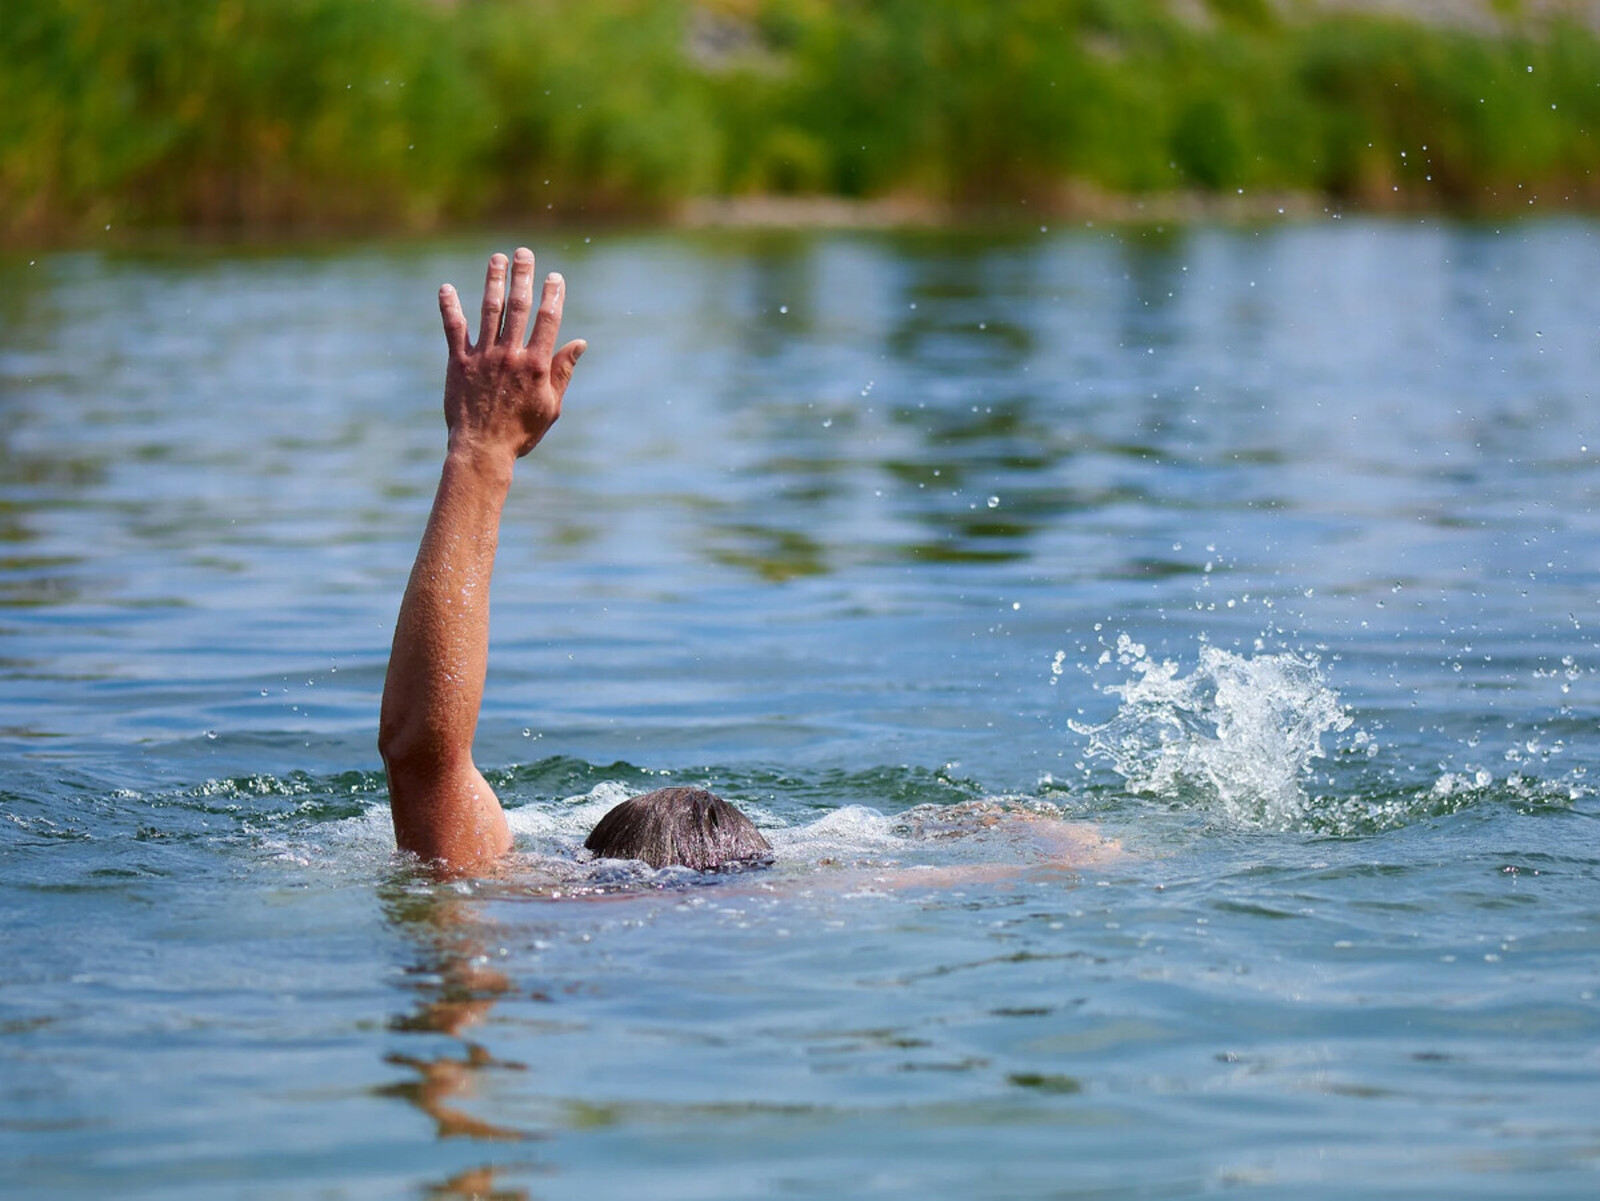 В Башкирии открыт счёт трагедиям на воде. Мужчина утонул на озере